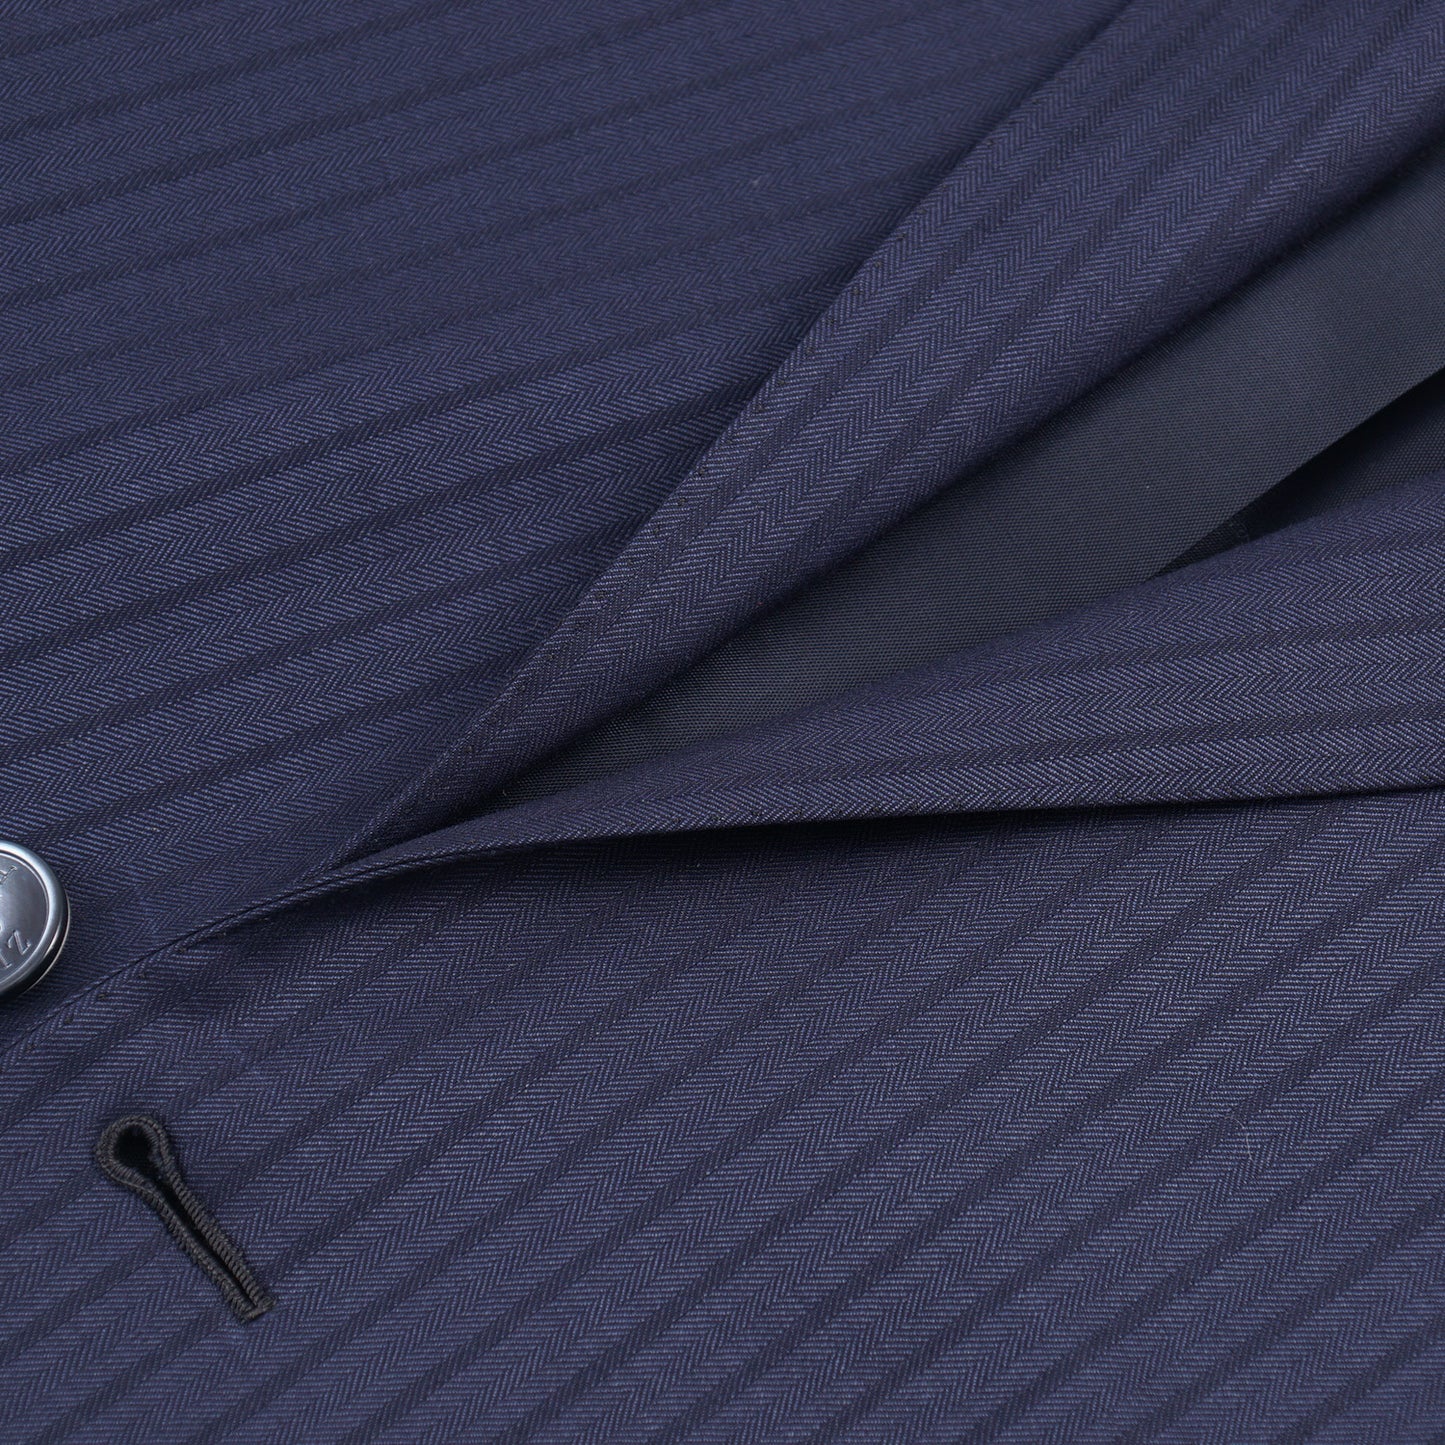 Zilli Dark Blue Stripe Superfine Wool Suit - Top Shelf Apparel